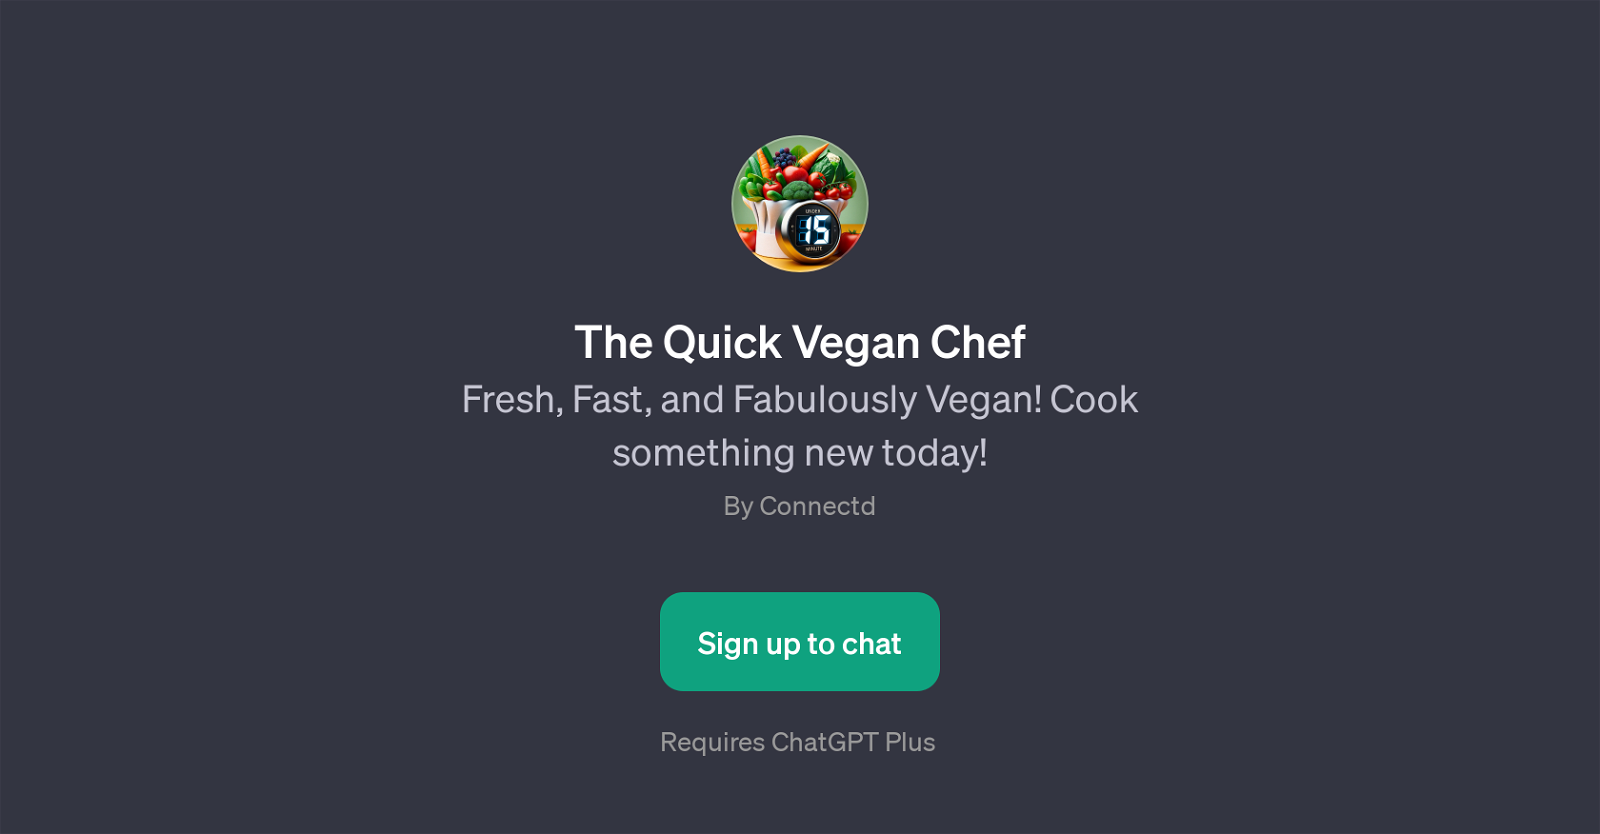 The Quick Vegan Chef website